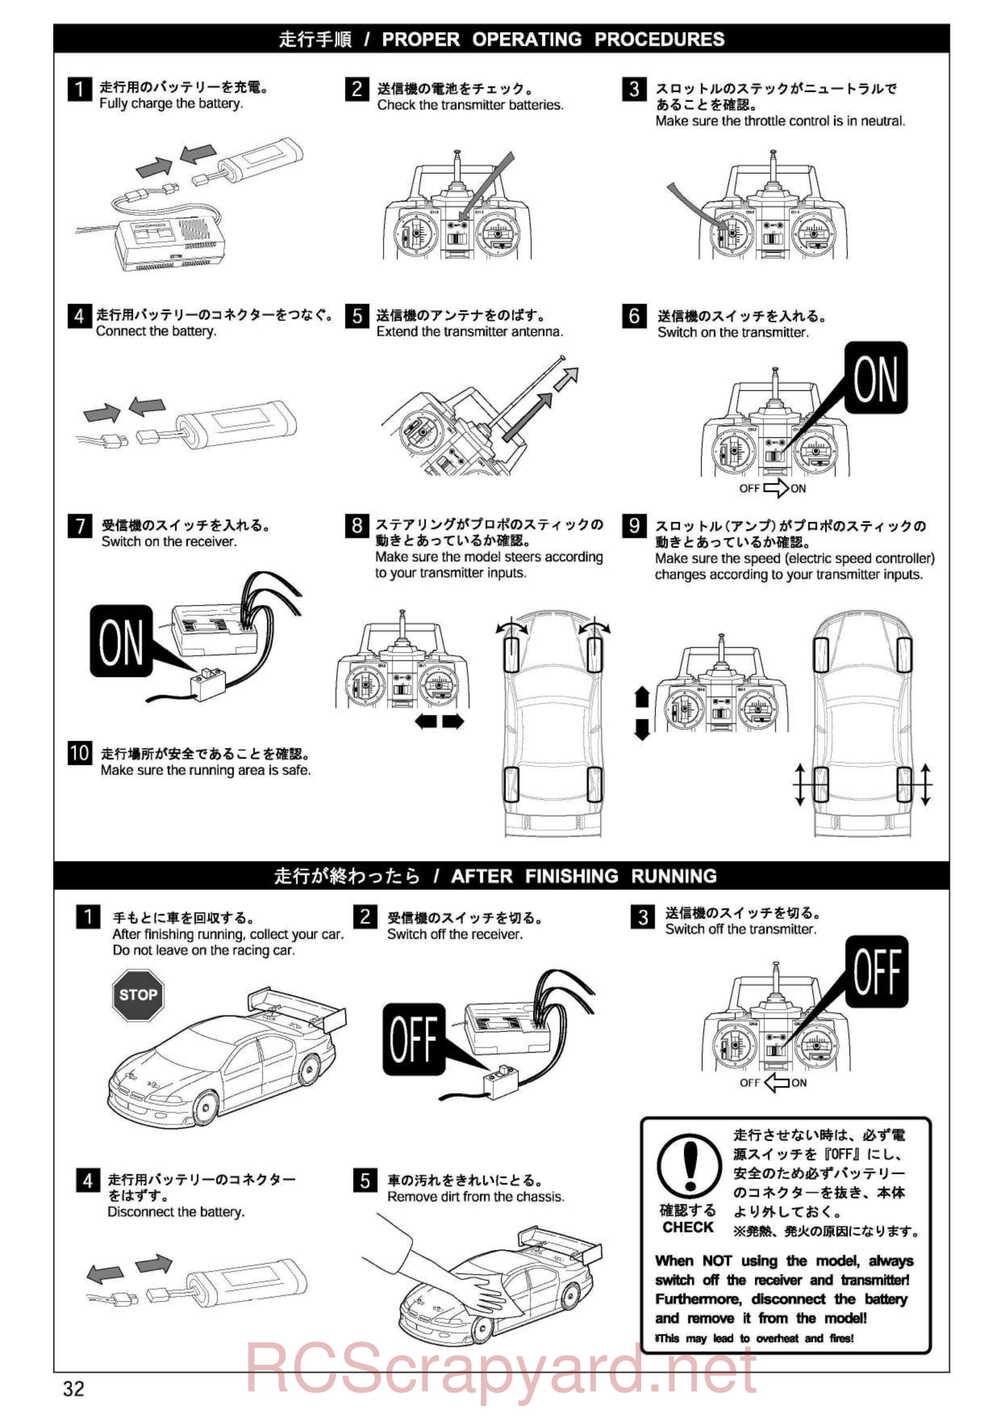 Kyosho - 30023 - Stalion-Shin - Manual - Page 32